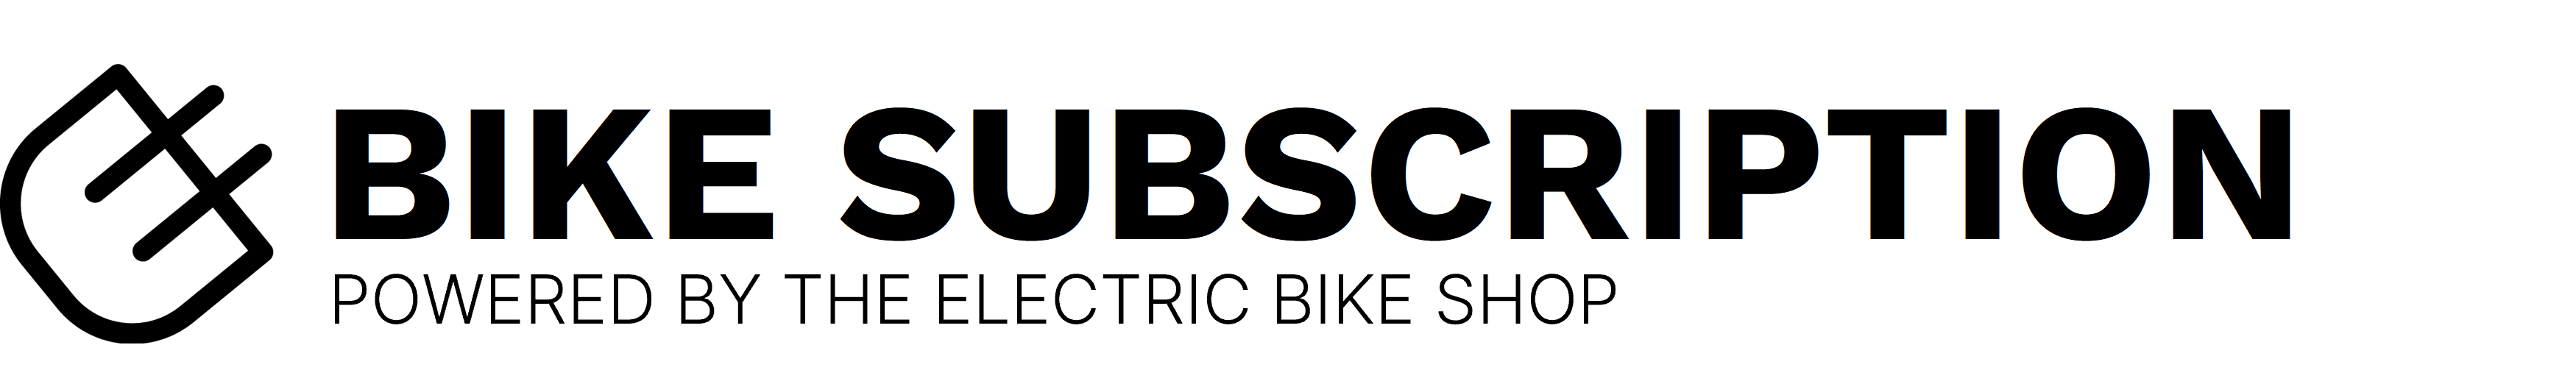 bikesub-text-logo